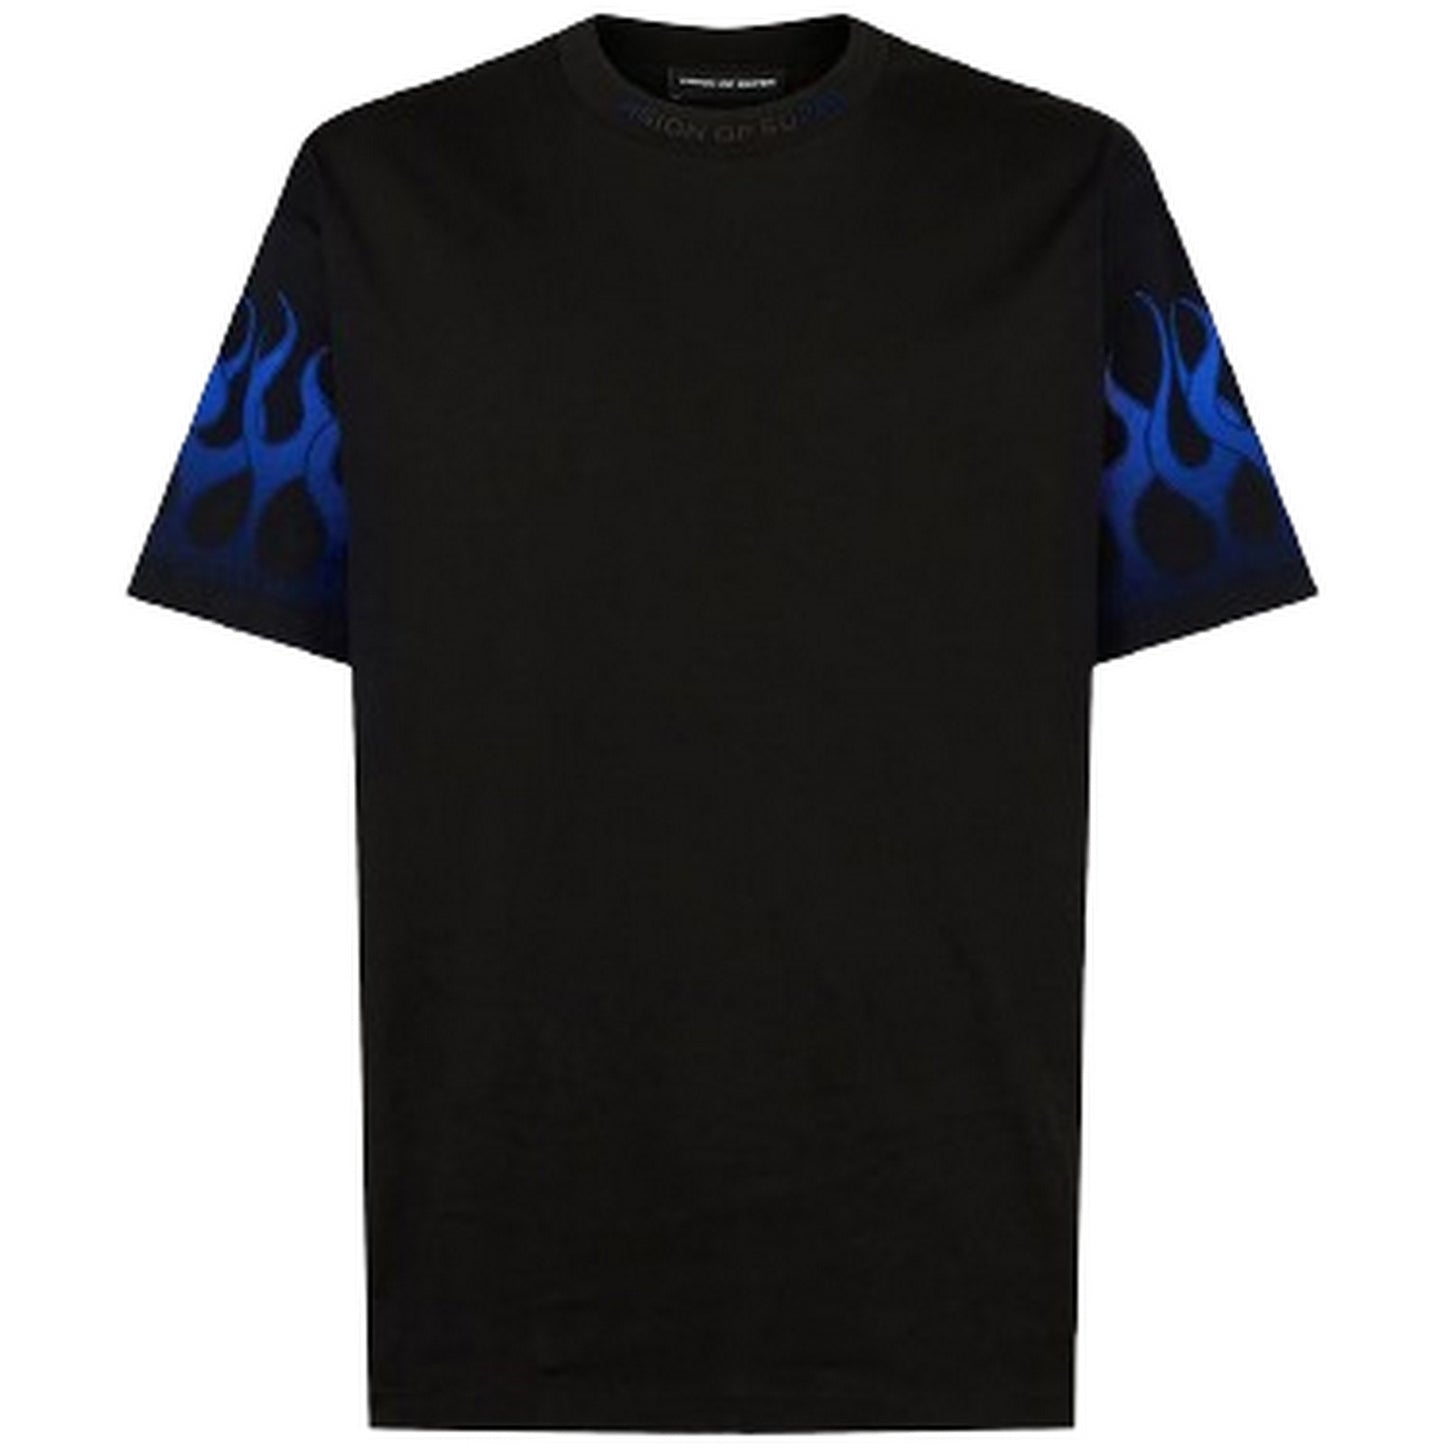 T-shirt Uomo Vision of Super - Black Tshirt With Blue Flames - Nero